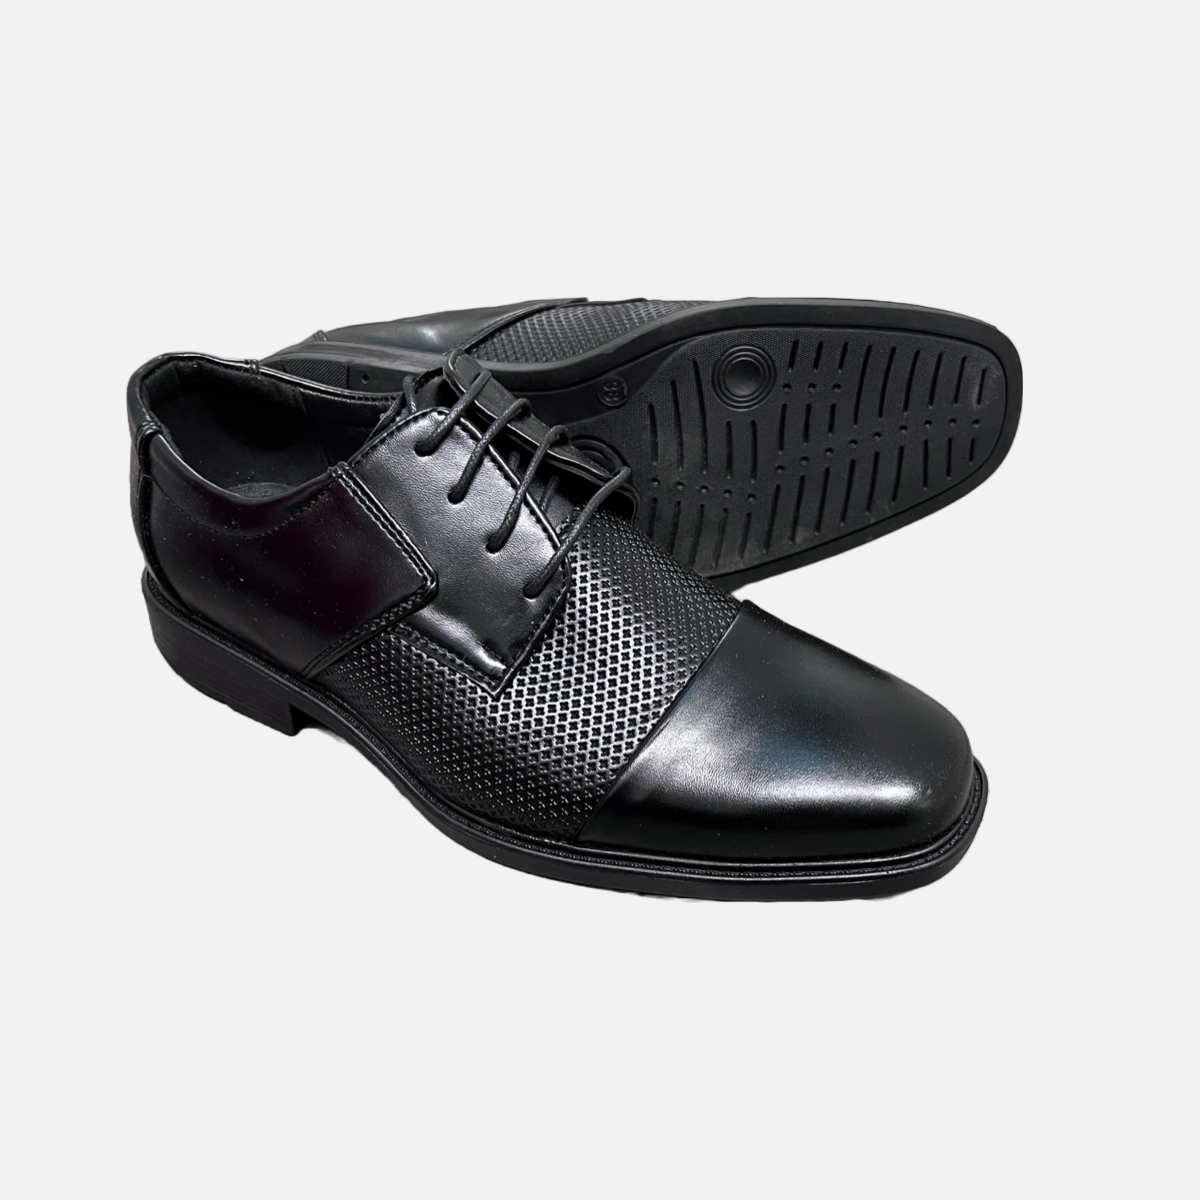 Debonair Men's Black Dress Shoe